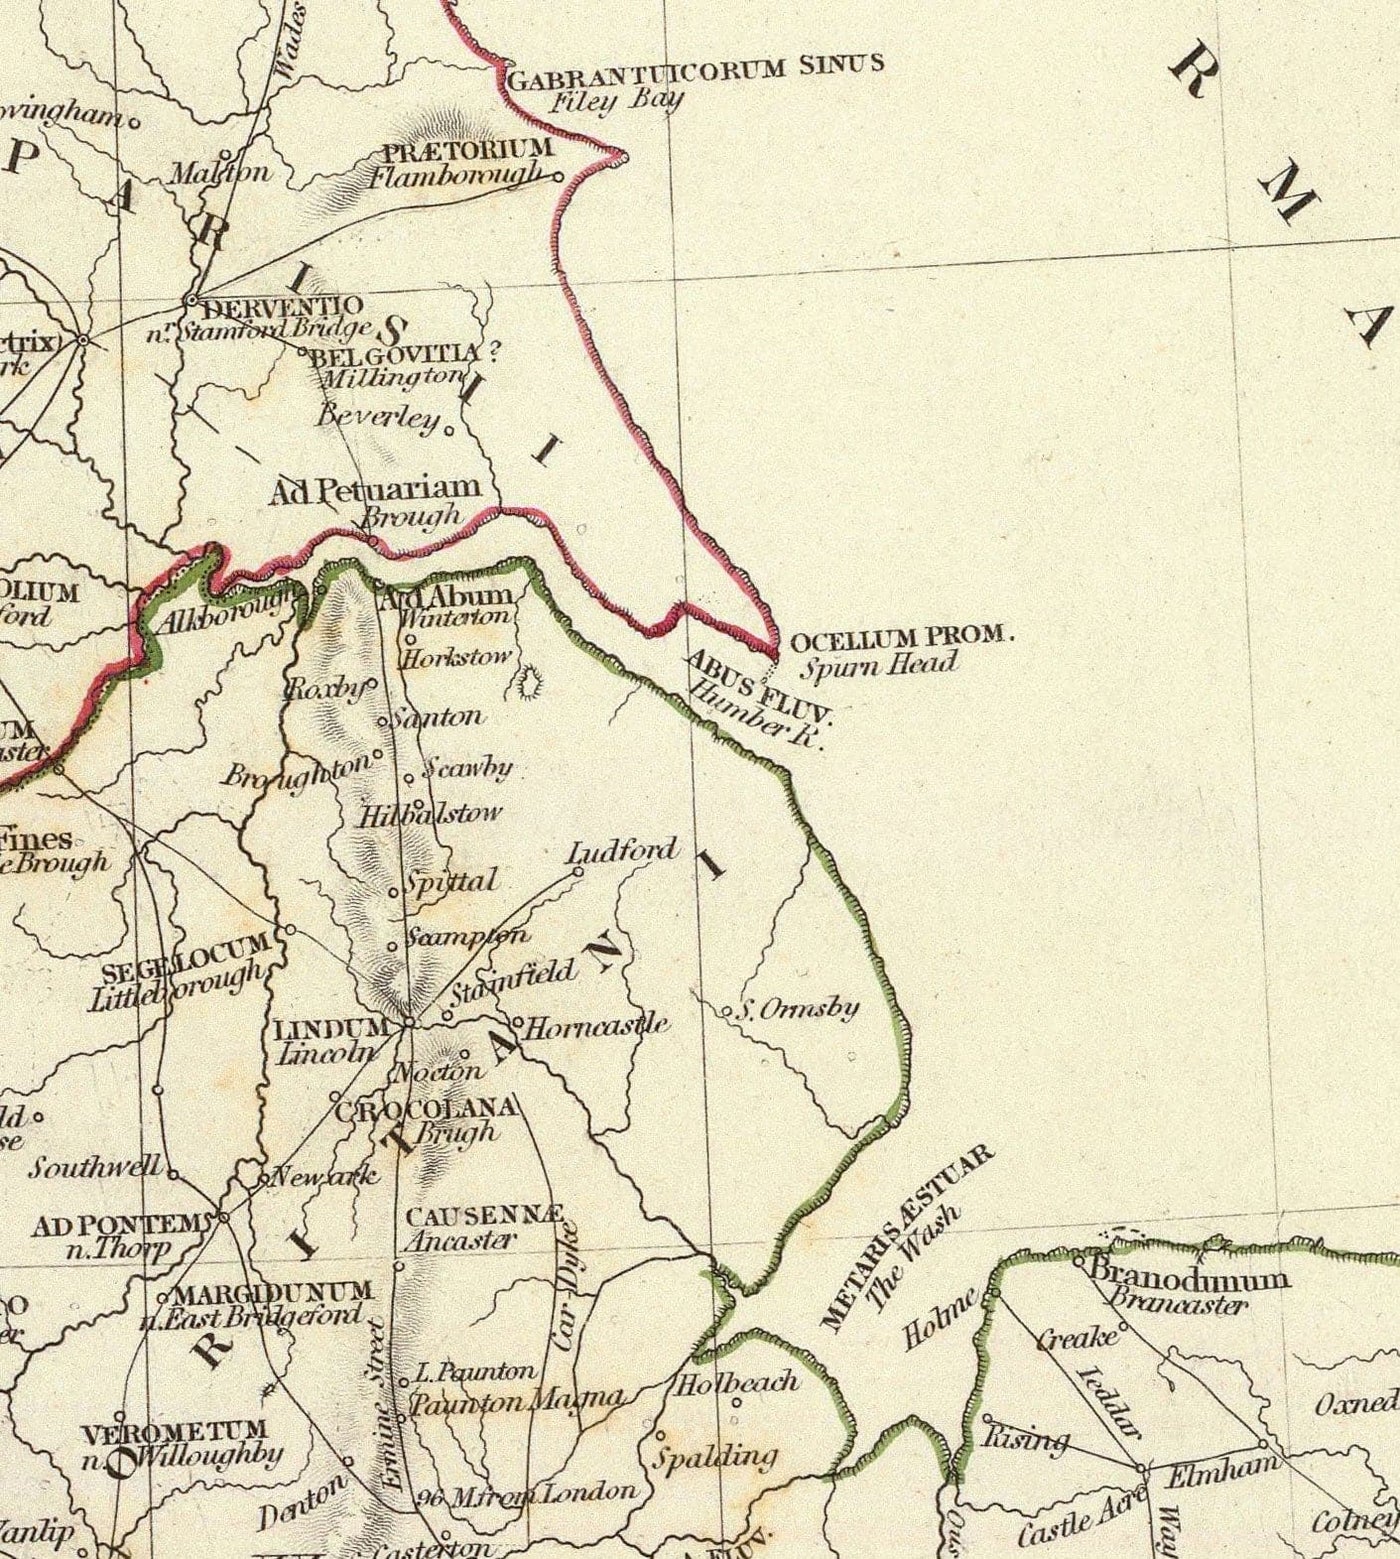 Old Map of Ancient Britain, 1834 - Roman Britannia & Roads, Celtic Tribes, Silures, Dobunni, Parisi, Trinovantes, Regni